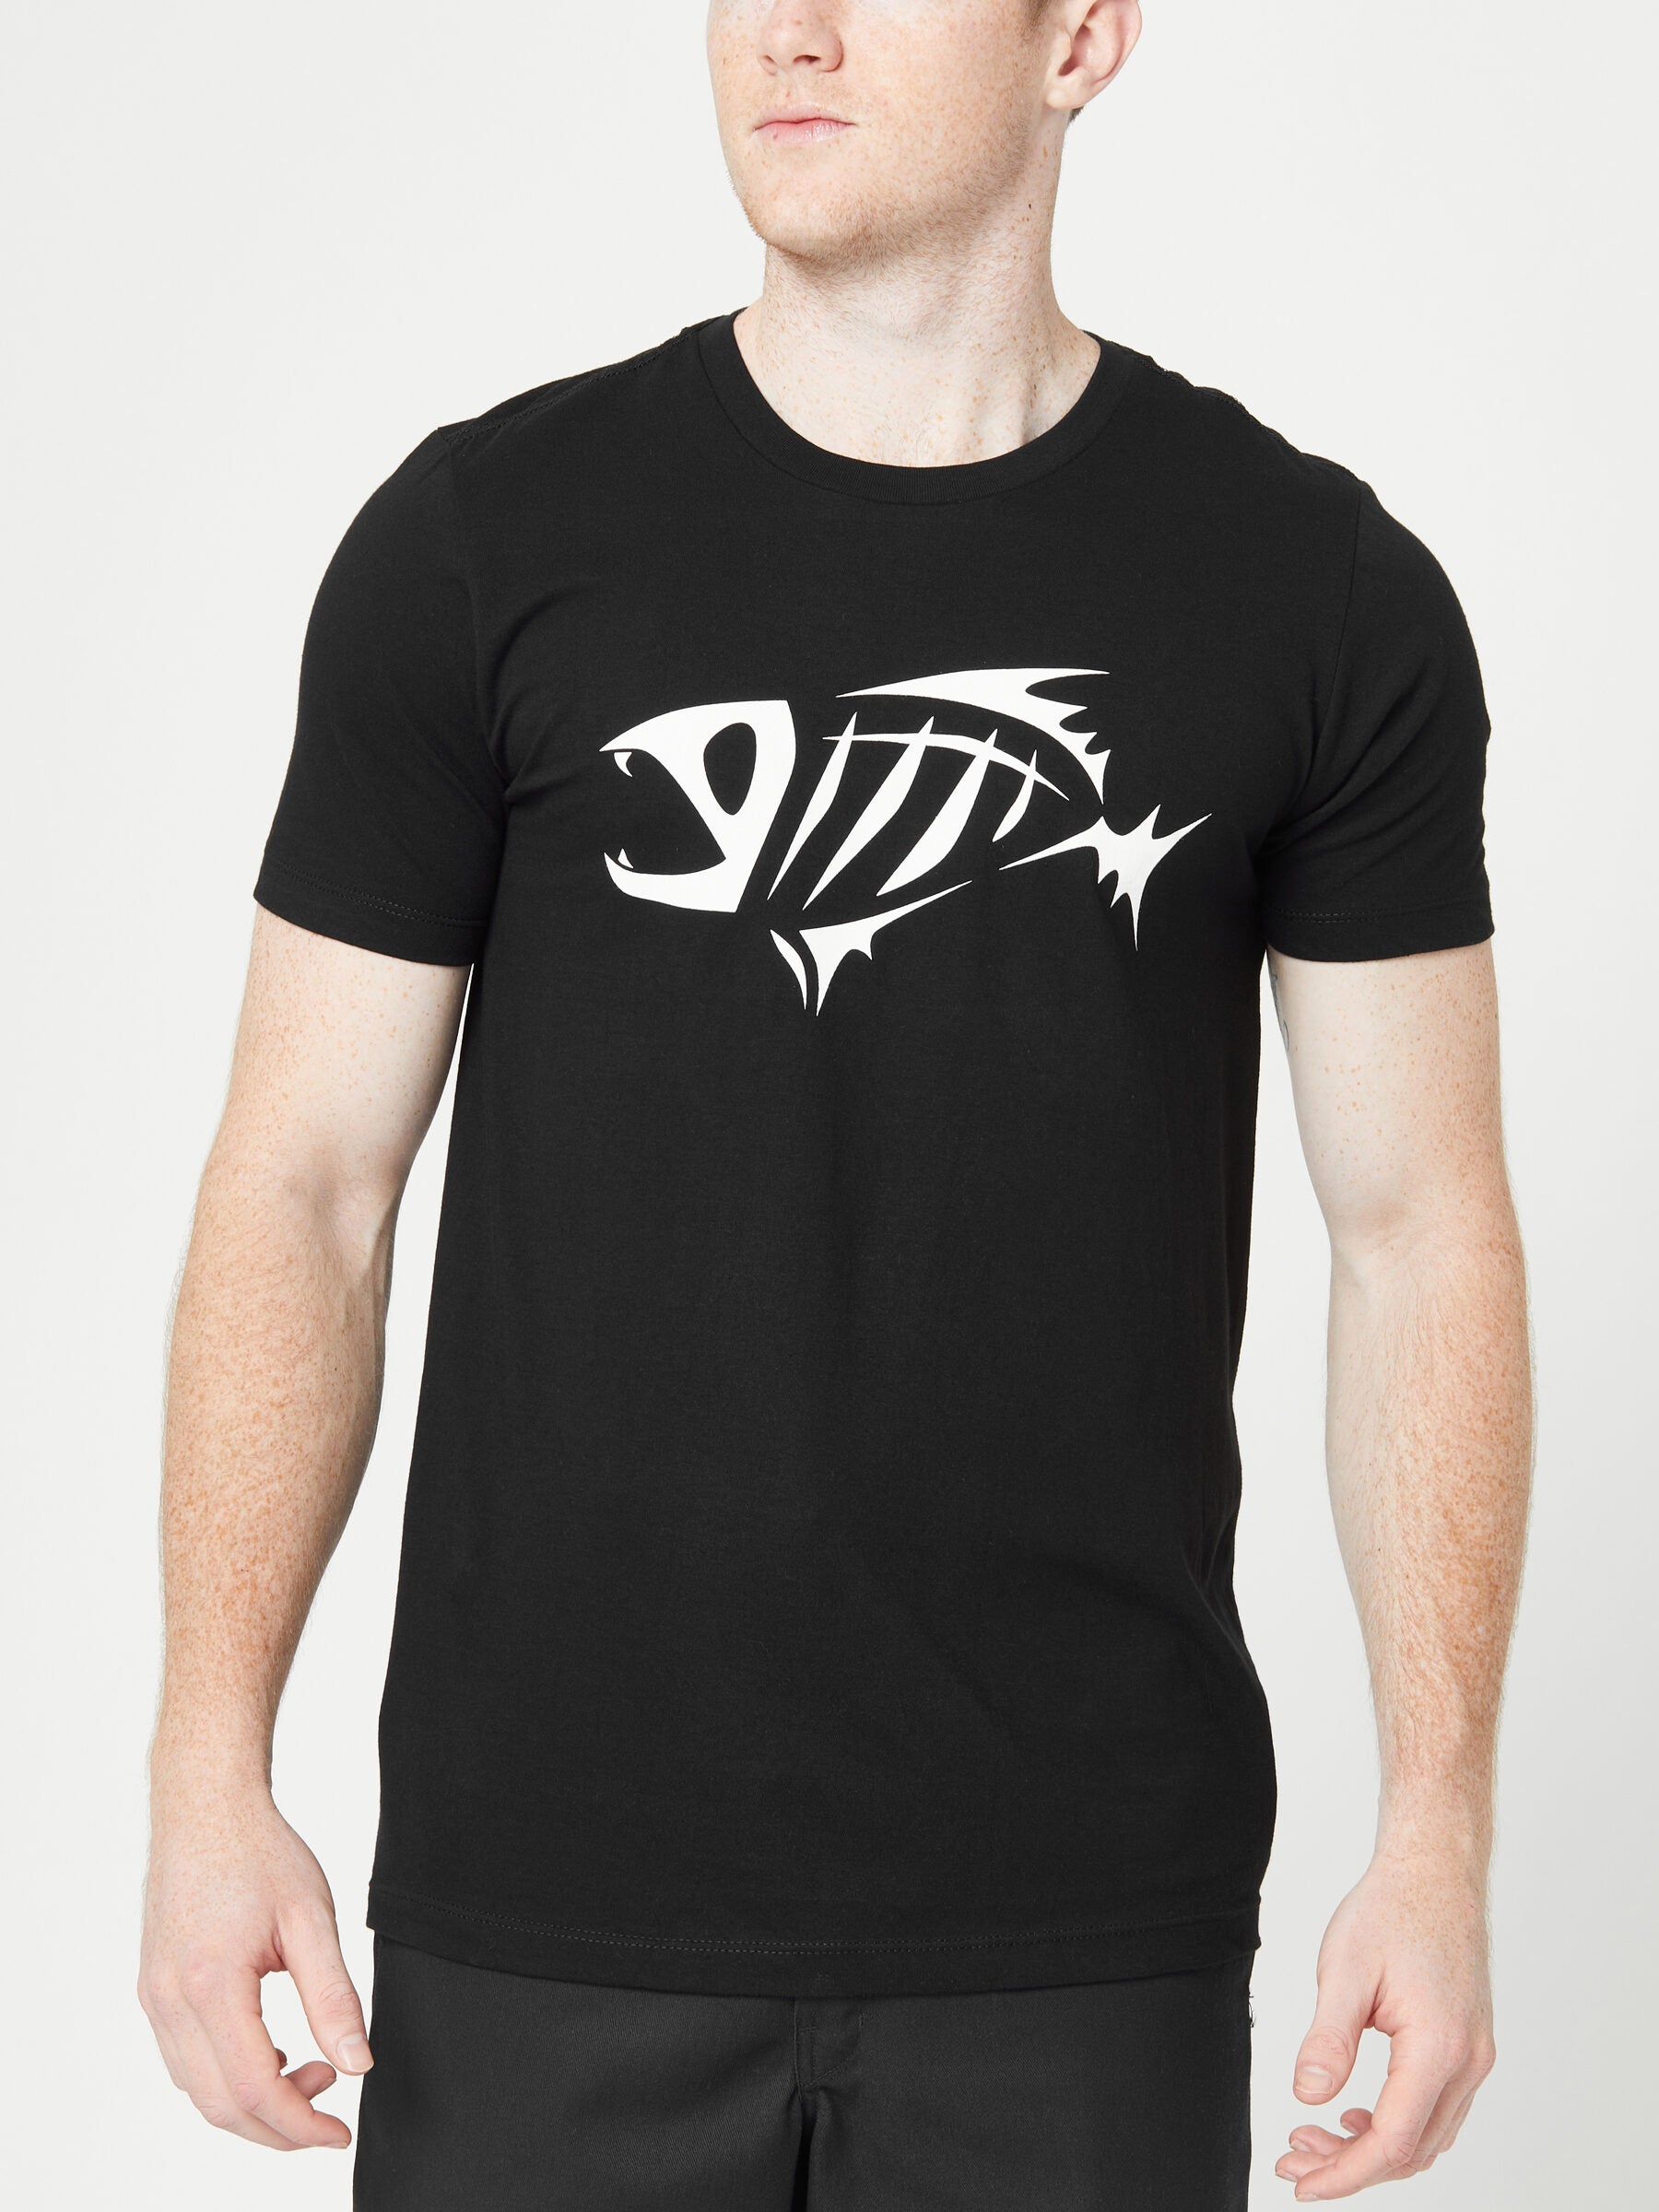 2019 G Loomis Skeleton Fish Logo Short Sleeve Tech Shirt 